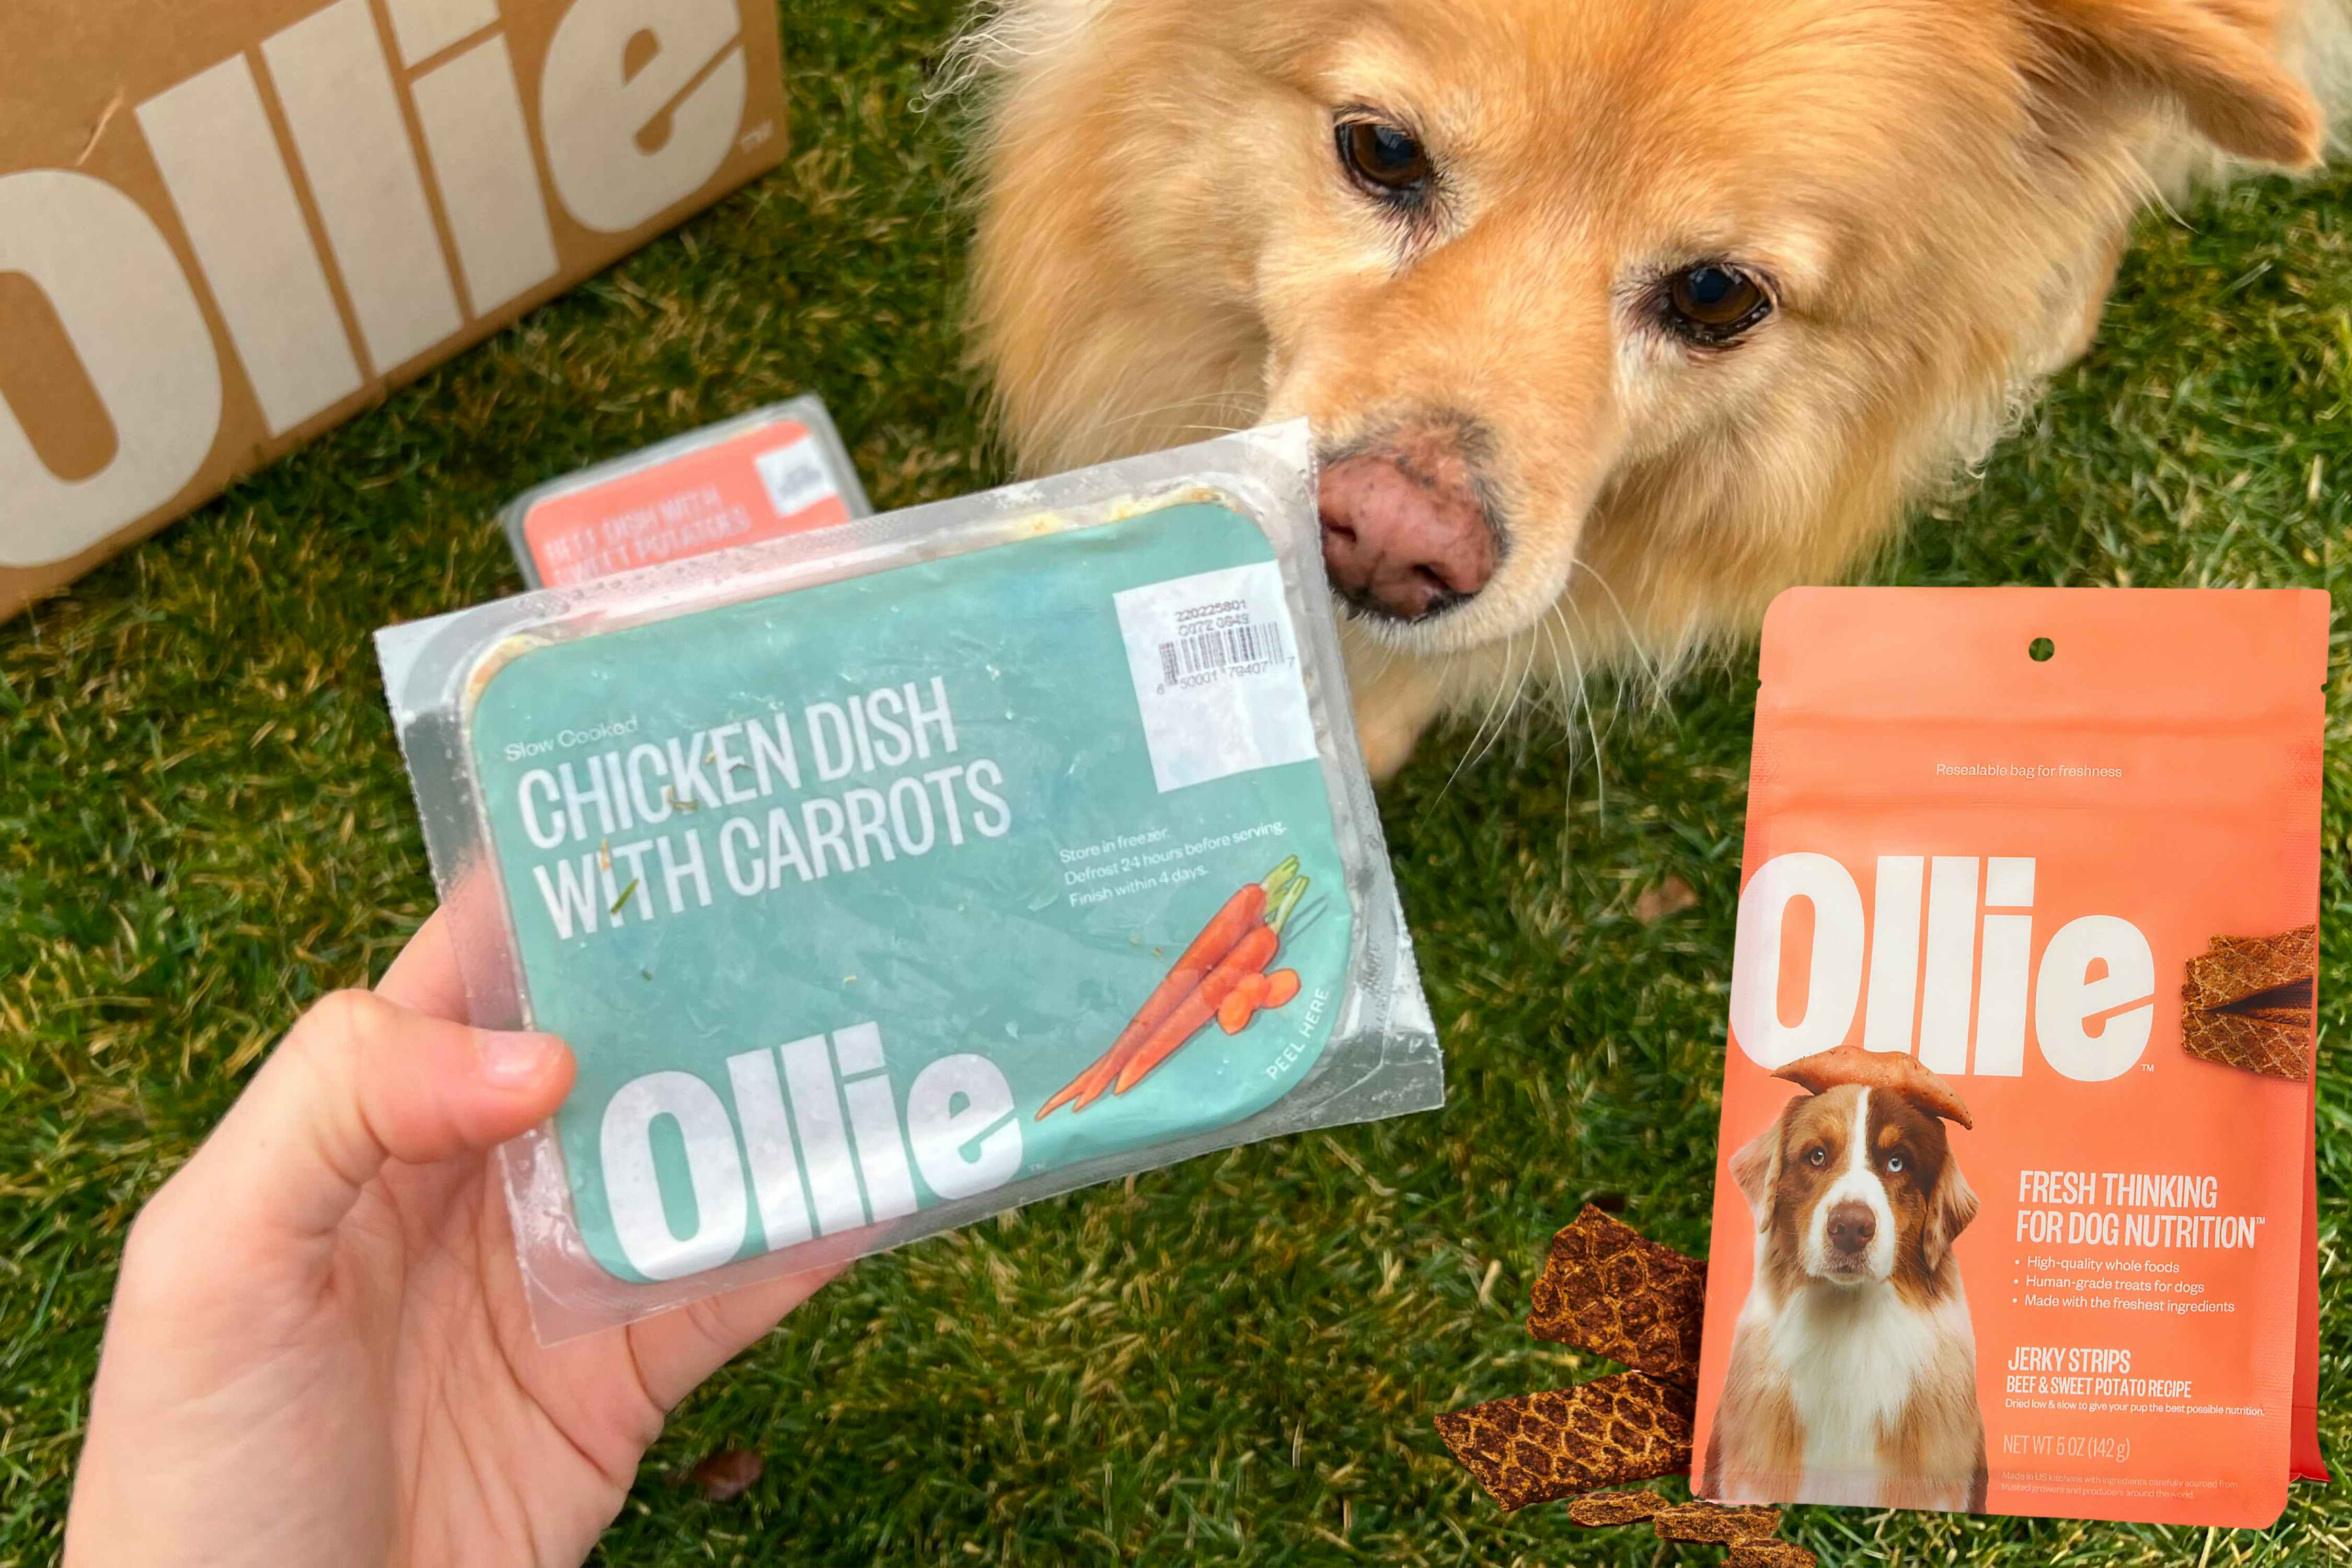 Ollie Fresh Dog Food, as Low as $19 Shipped — Plus Score Free Jerky Treats